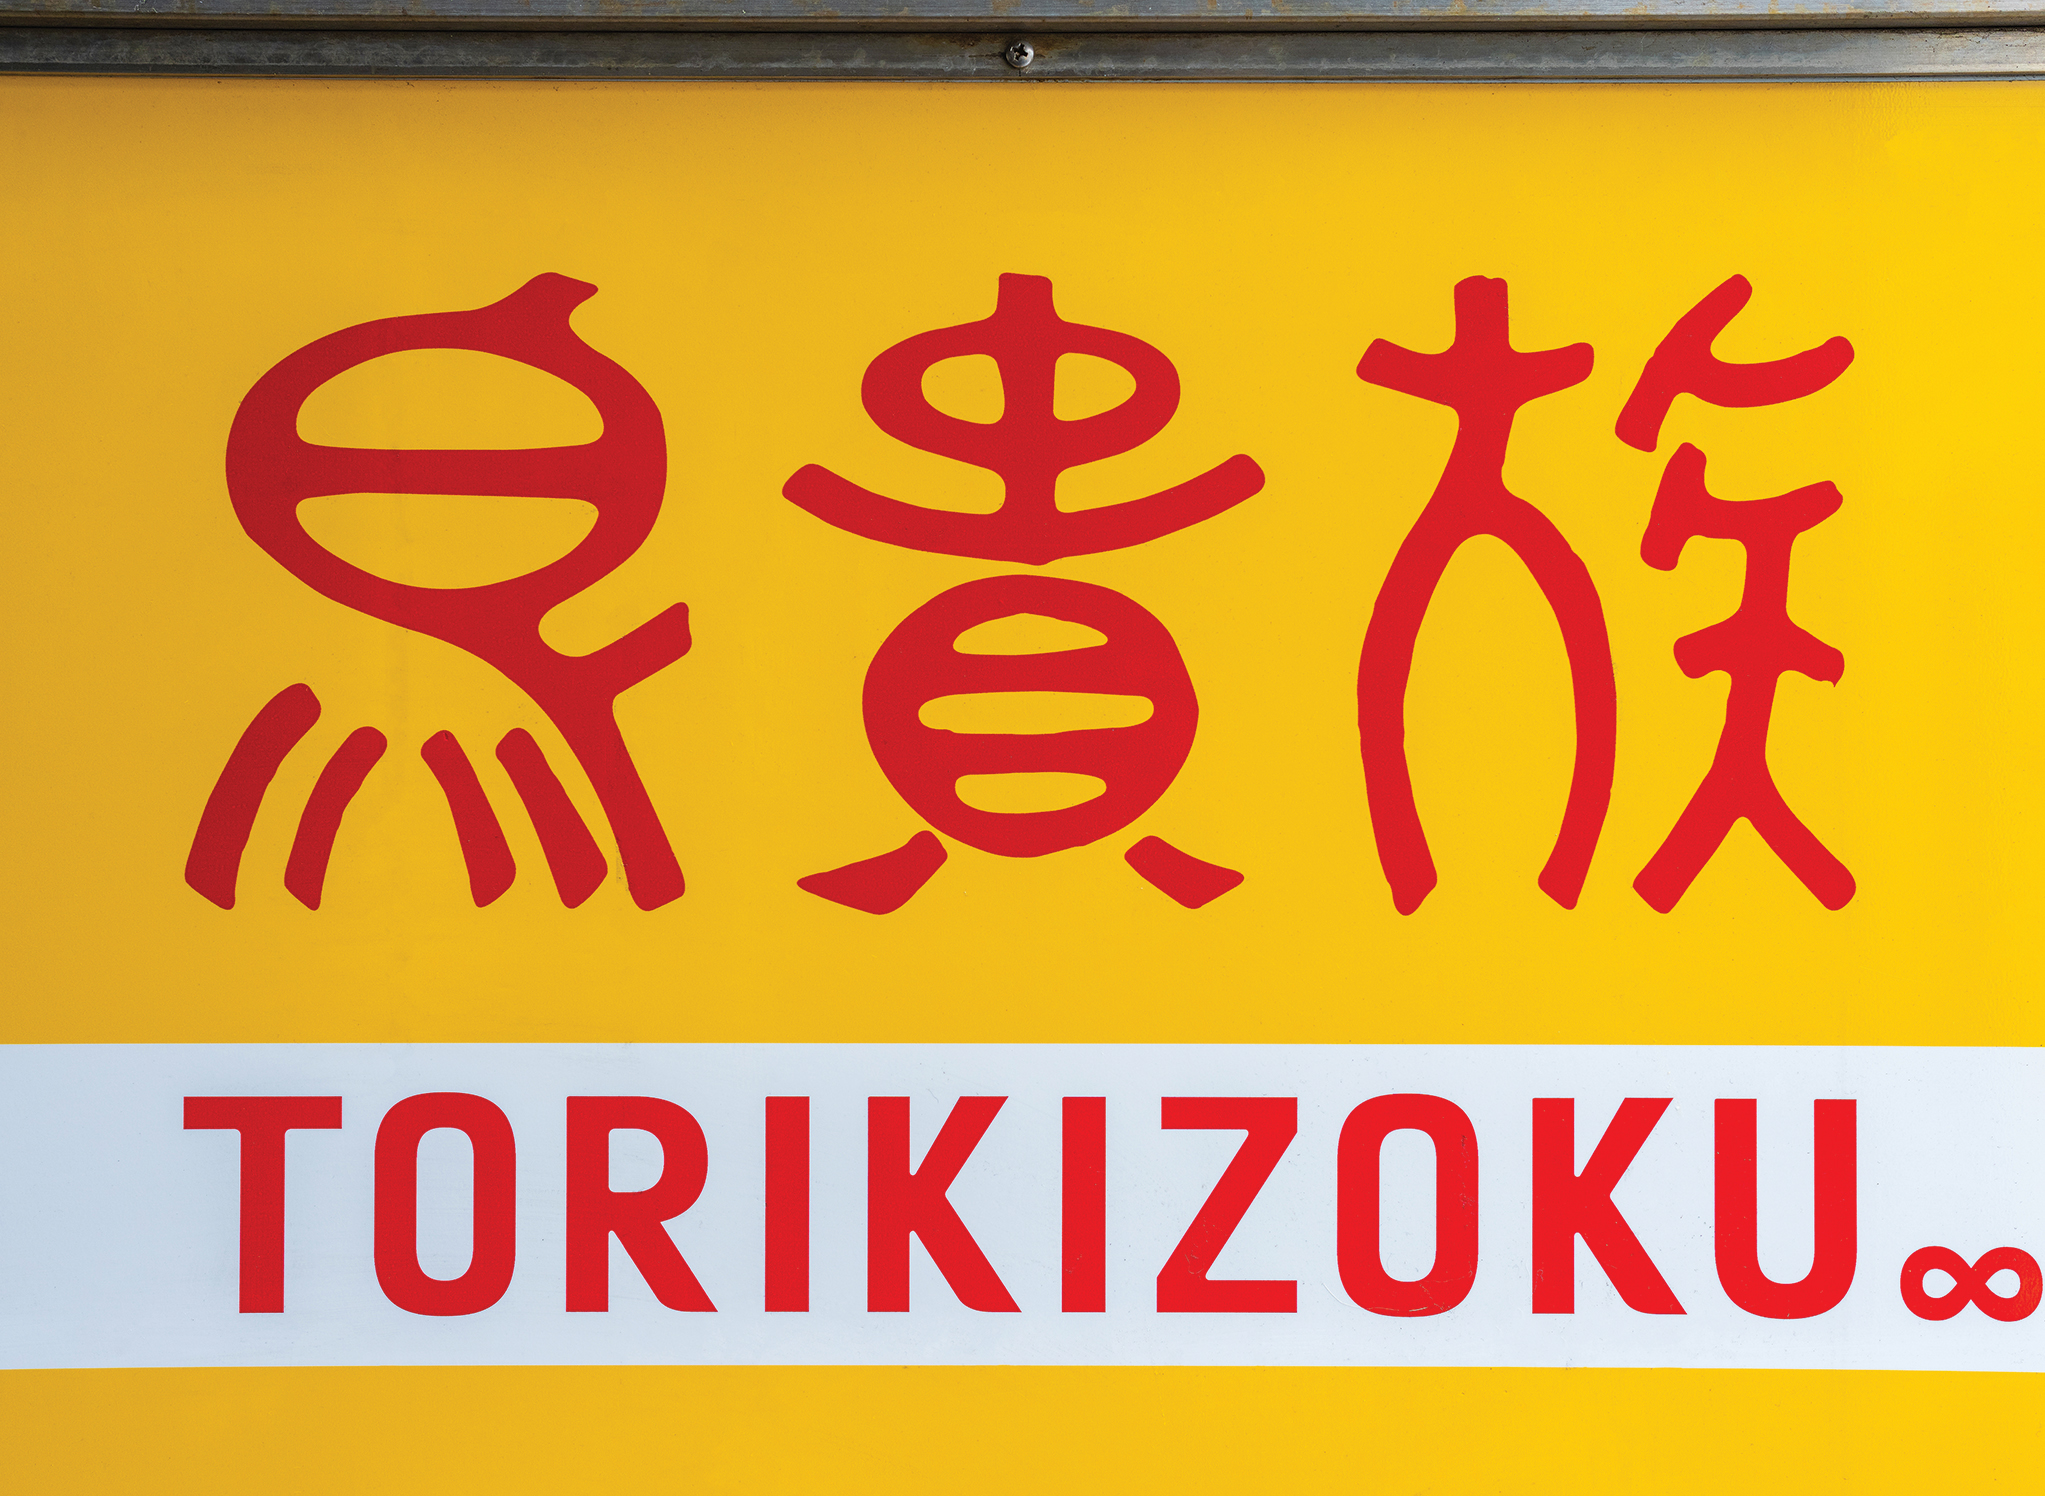 torikizoku goes international